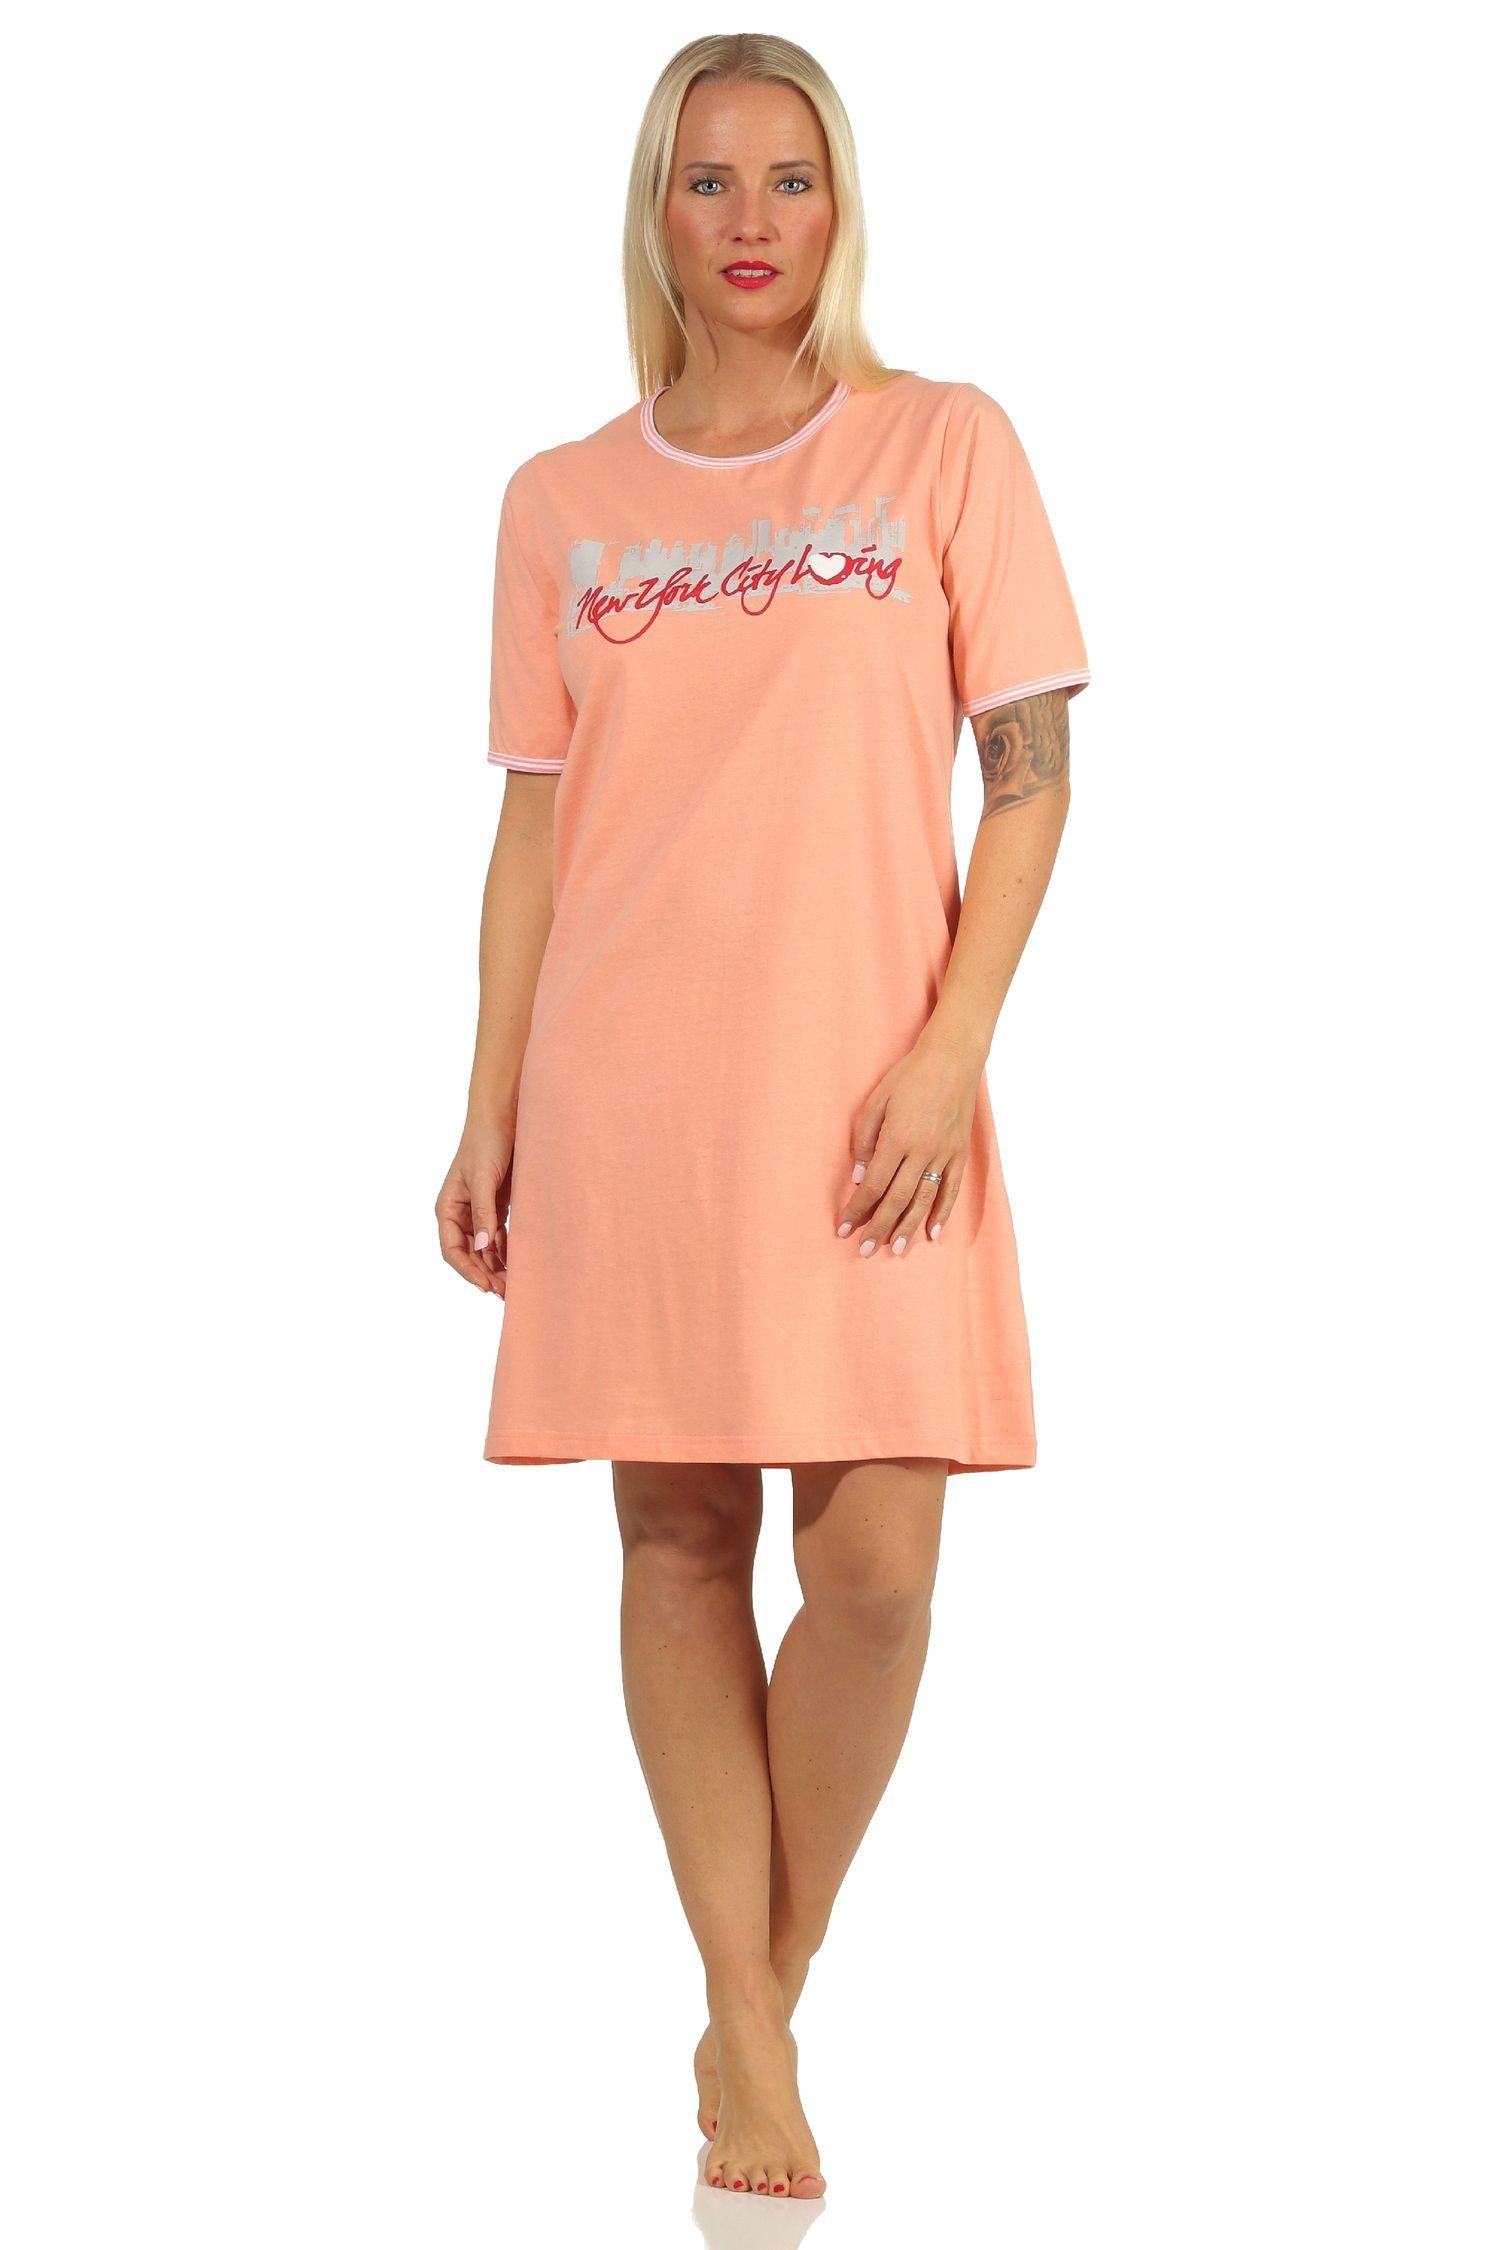 Normann Nachthemd Damen Nachthemd kurzarm mit Front-Print "New York City Loving" apricot | Nachthemden